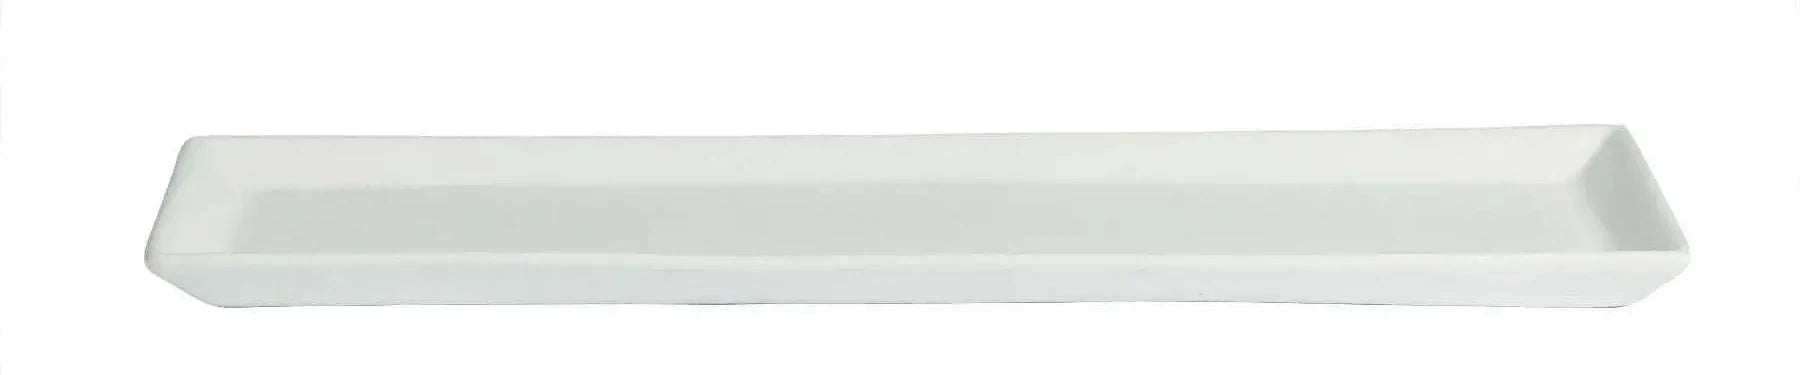 Bugambilia - Mod 57.6 Oz Large White Rectangular Gourmet Platter With Glossy Smooth Finish - PU003-MOD-WW